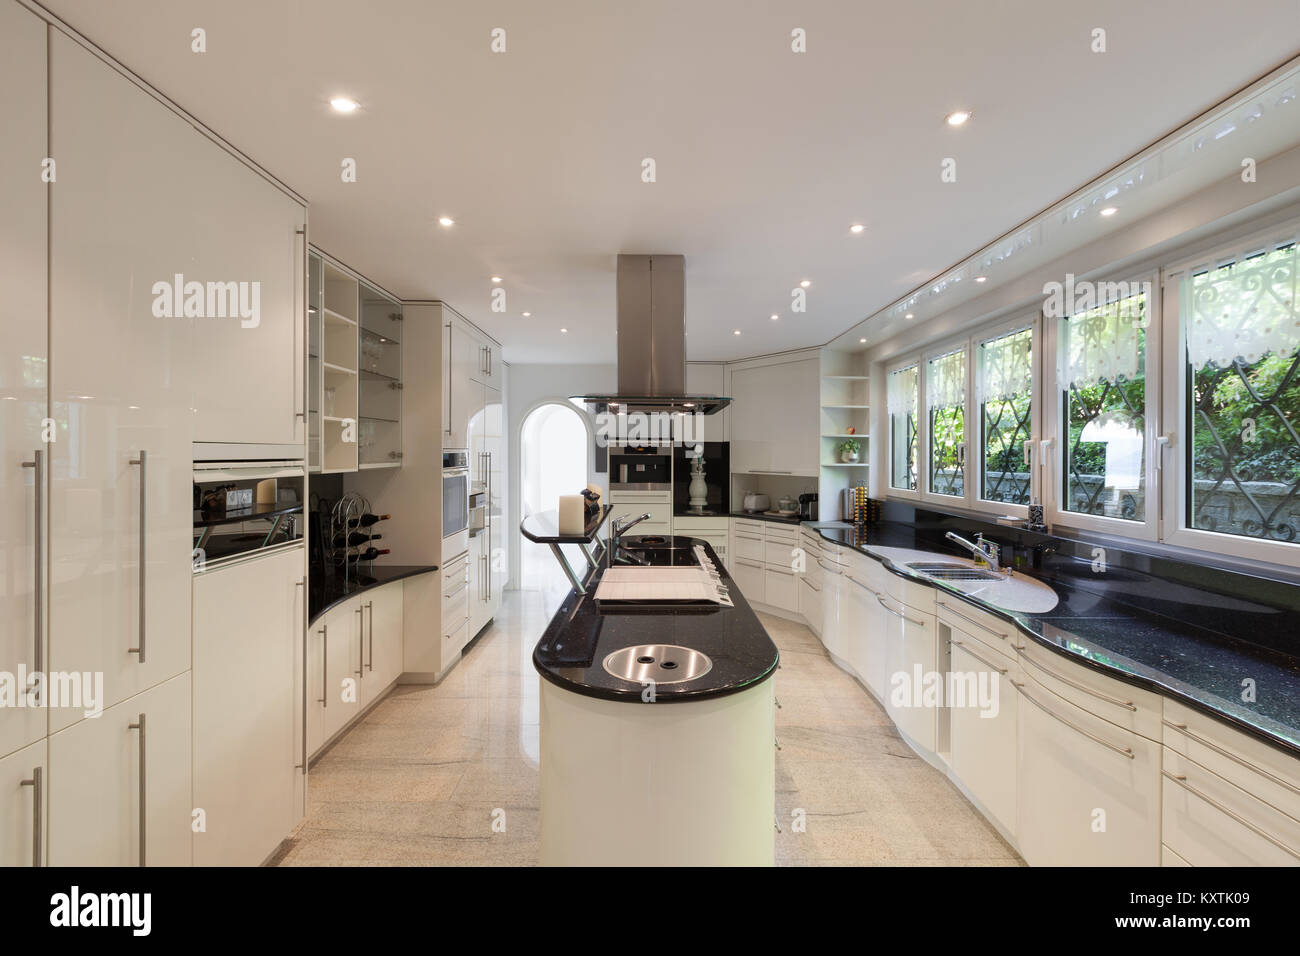 Interior, modern kitchen of a luxury home Stock Photo